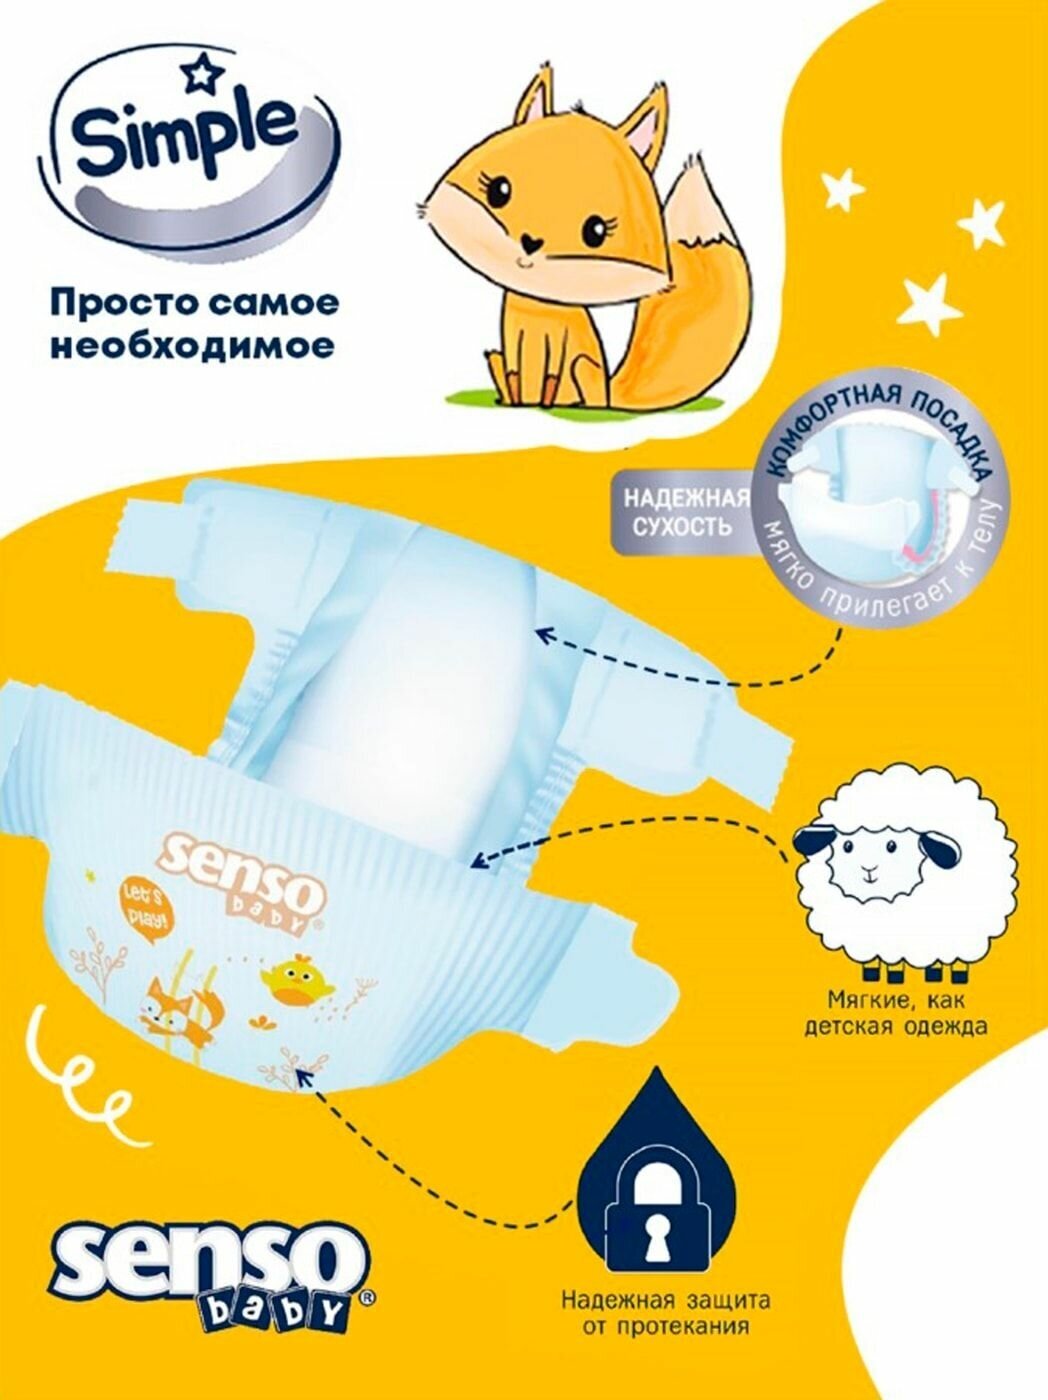 Подгузники Senso Baby Simple 4 L (7-18 кг) 50 шт